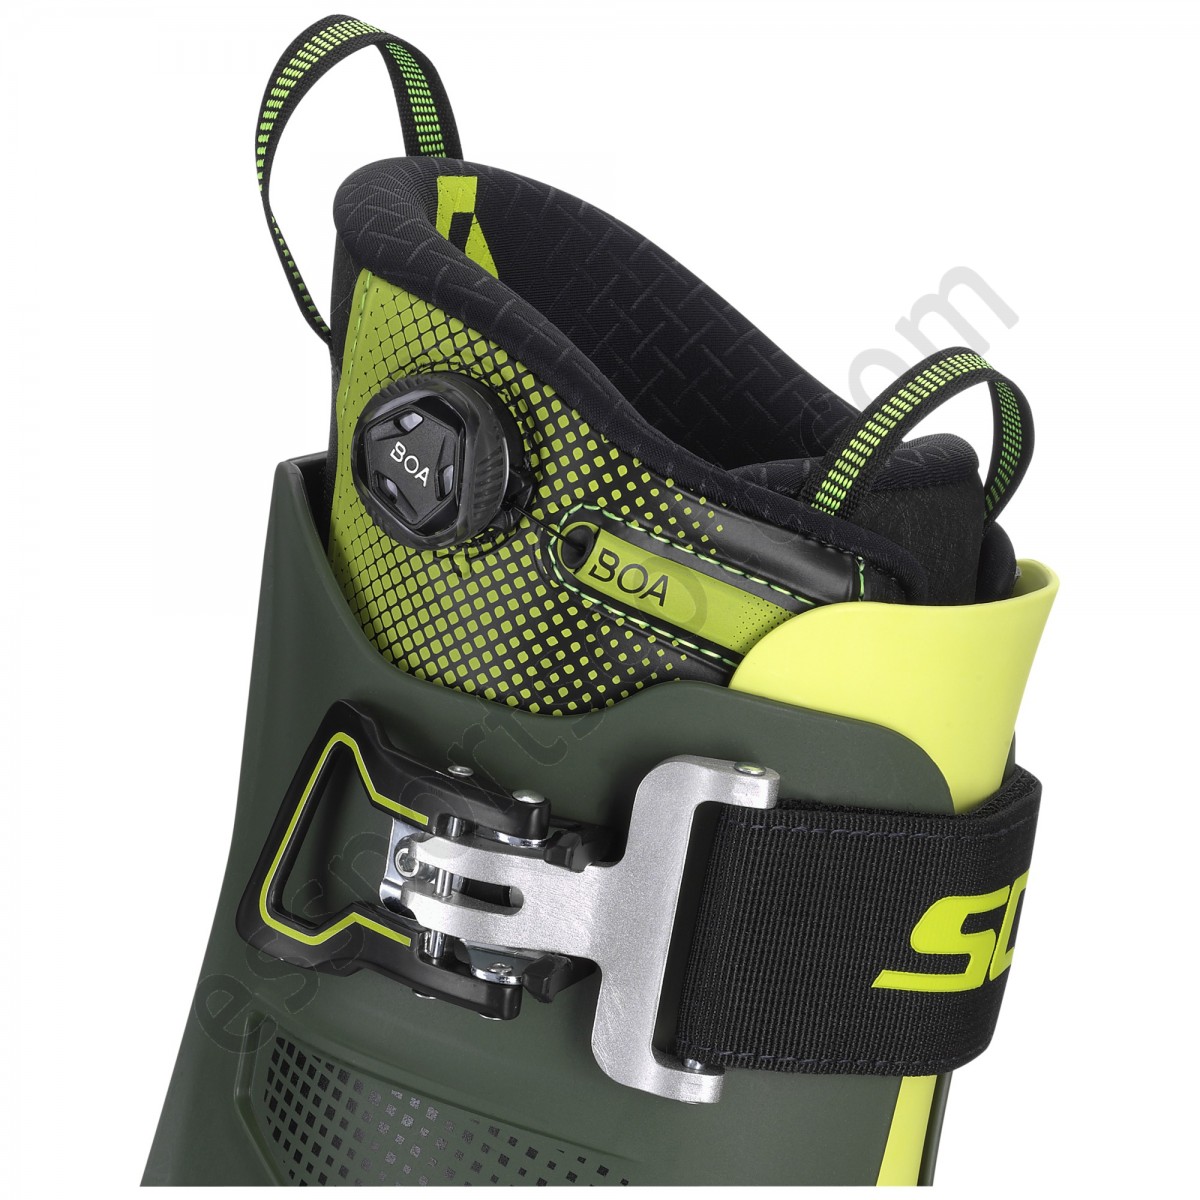 Scott Tienda ◇ Freeguide Carbon Ski Boot - -2